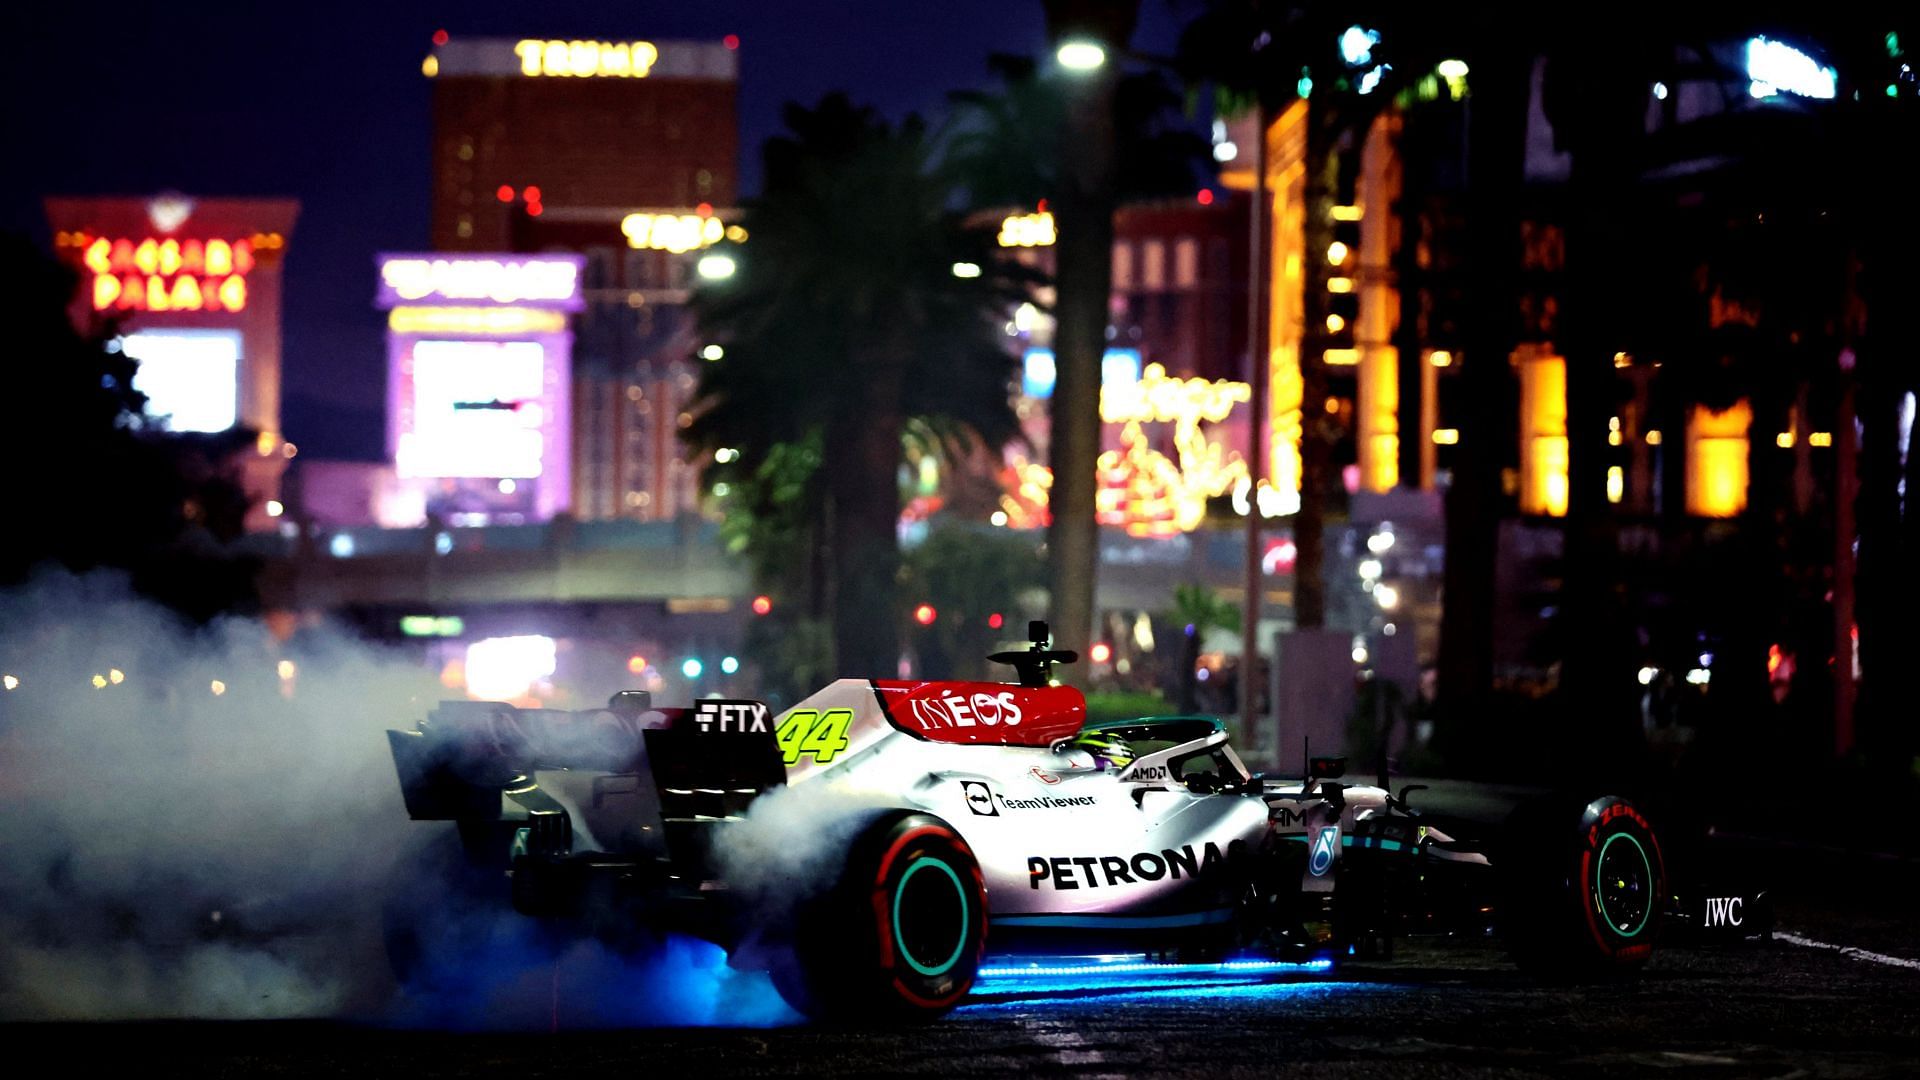 Lewis Hamilton at Las Vegas in his Mercedes W13. Image Credits: Reddit/u/Harry_Woollands